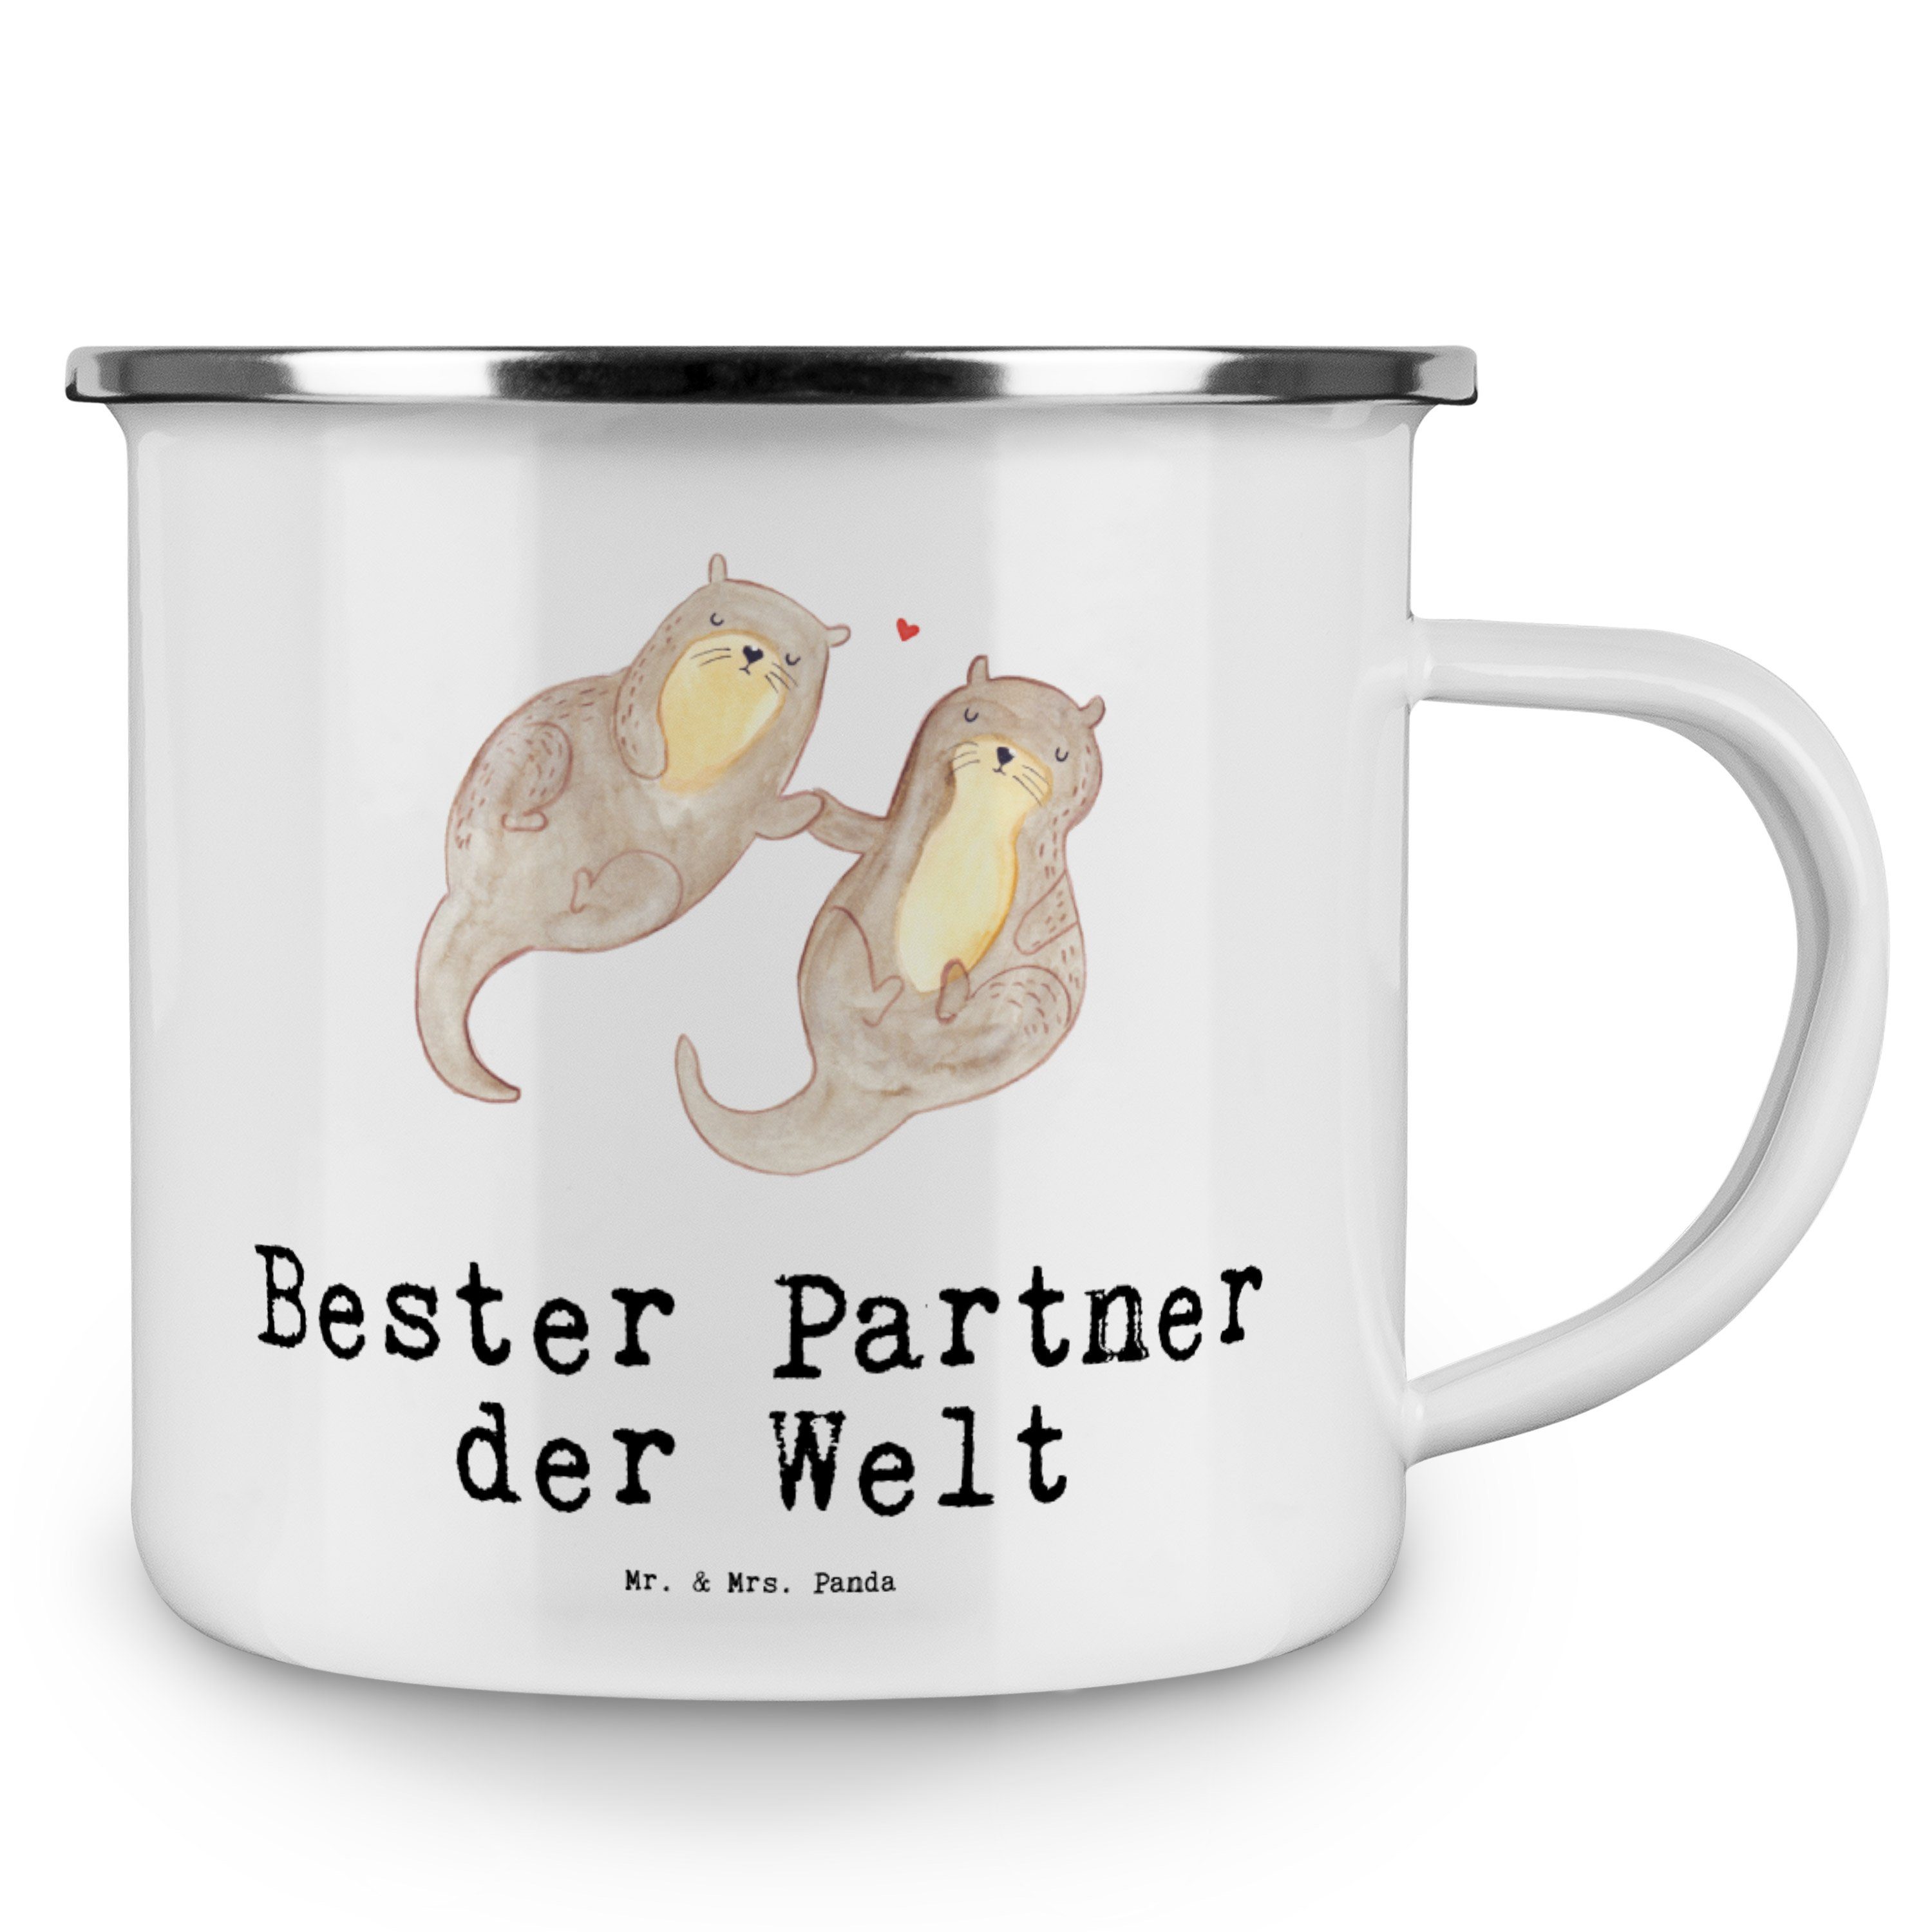 - Otter Emaille Bester Geschenk, der Outd, Welt & - Lebensgefährte, Weiß Mr. Becher Panda Mrs. Partner